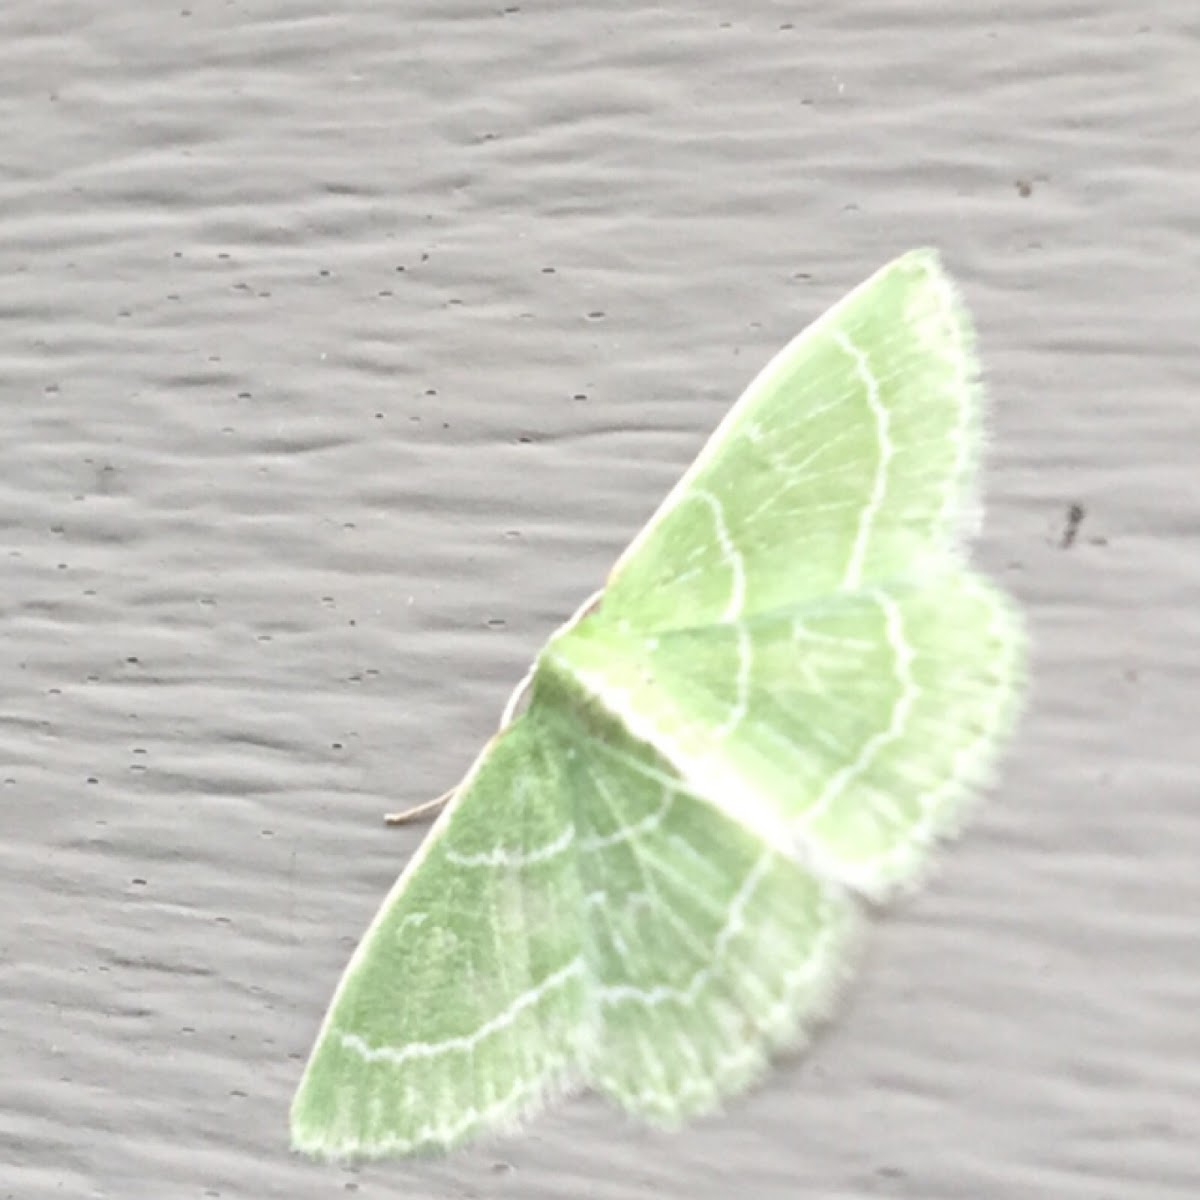 Wavy-lined emerald moth